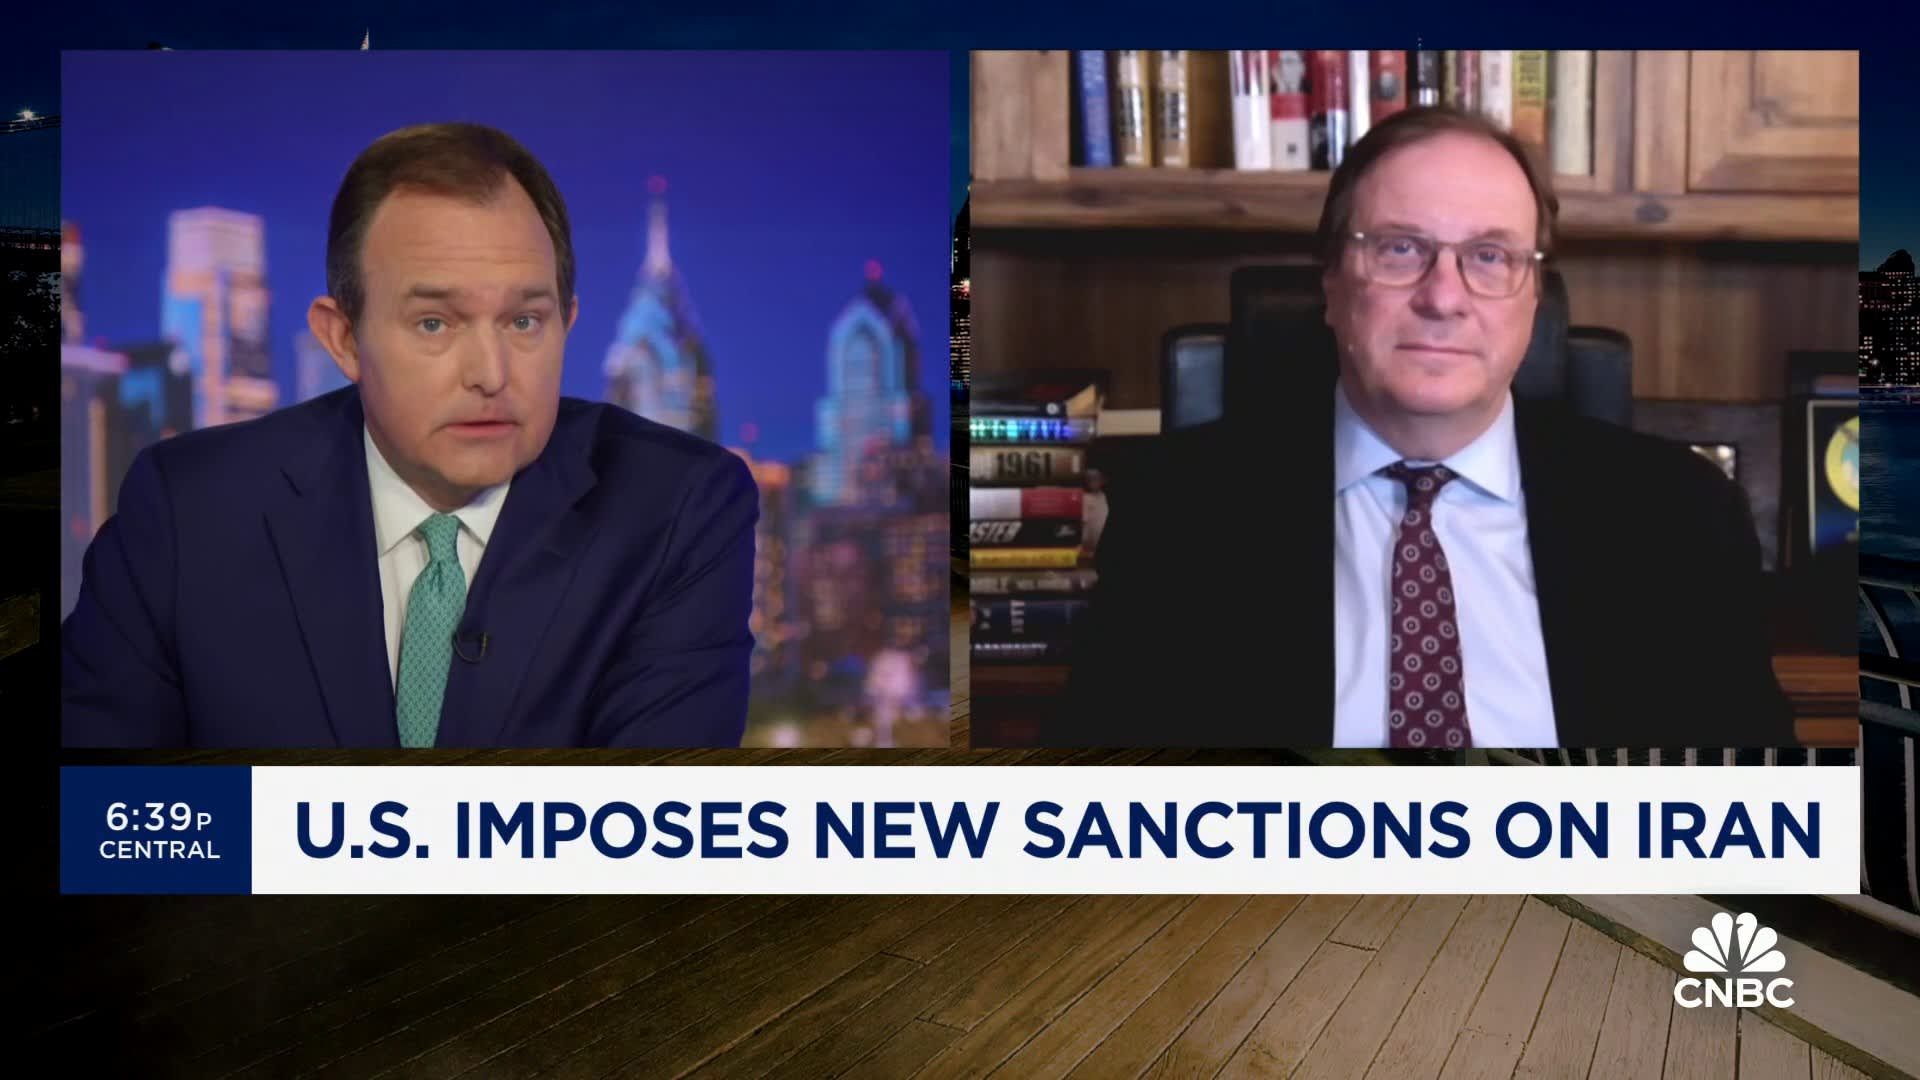 Atlantic Council President Fed Kempe: Iran sanctions more symbolic than disruptive [Video]